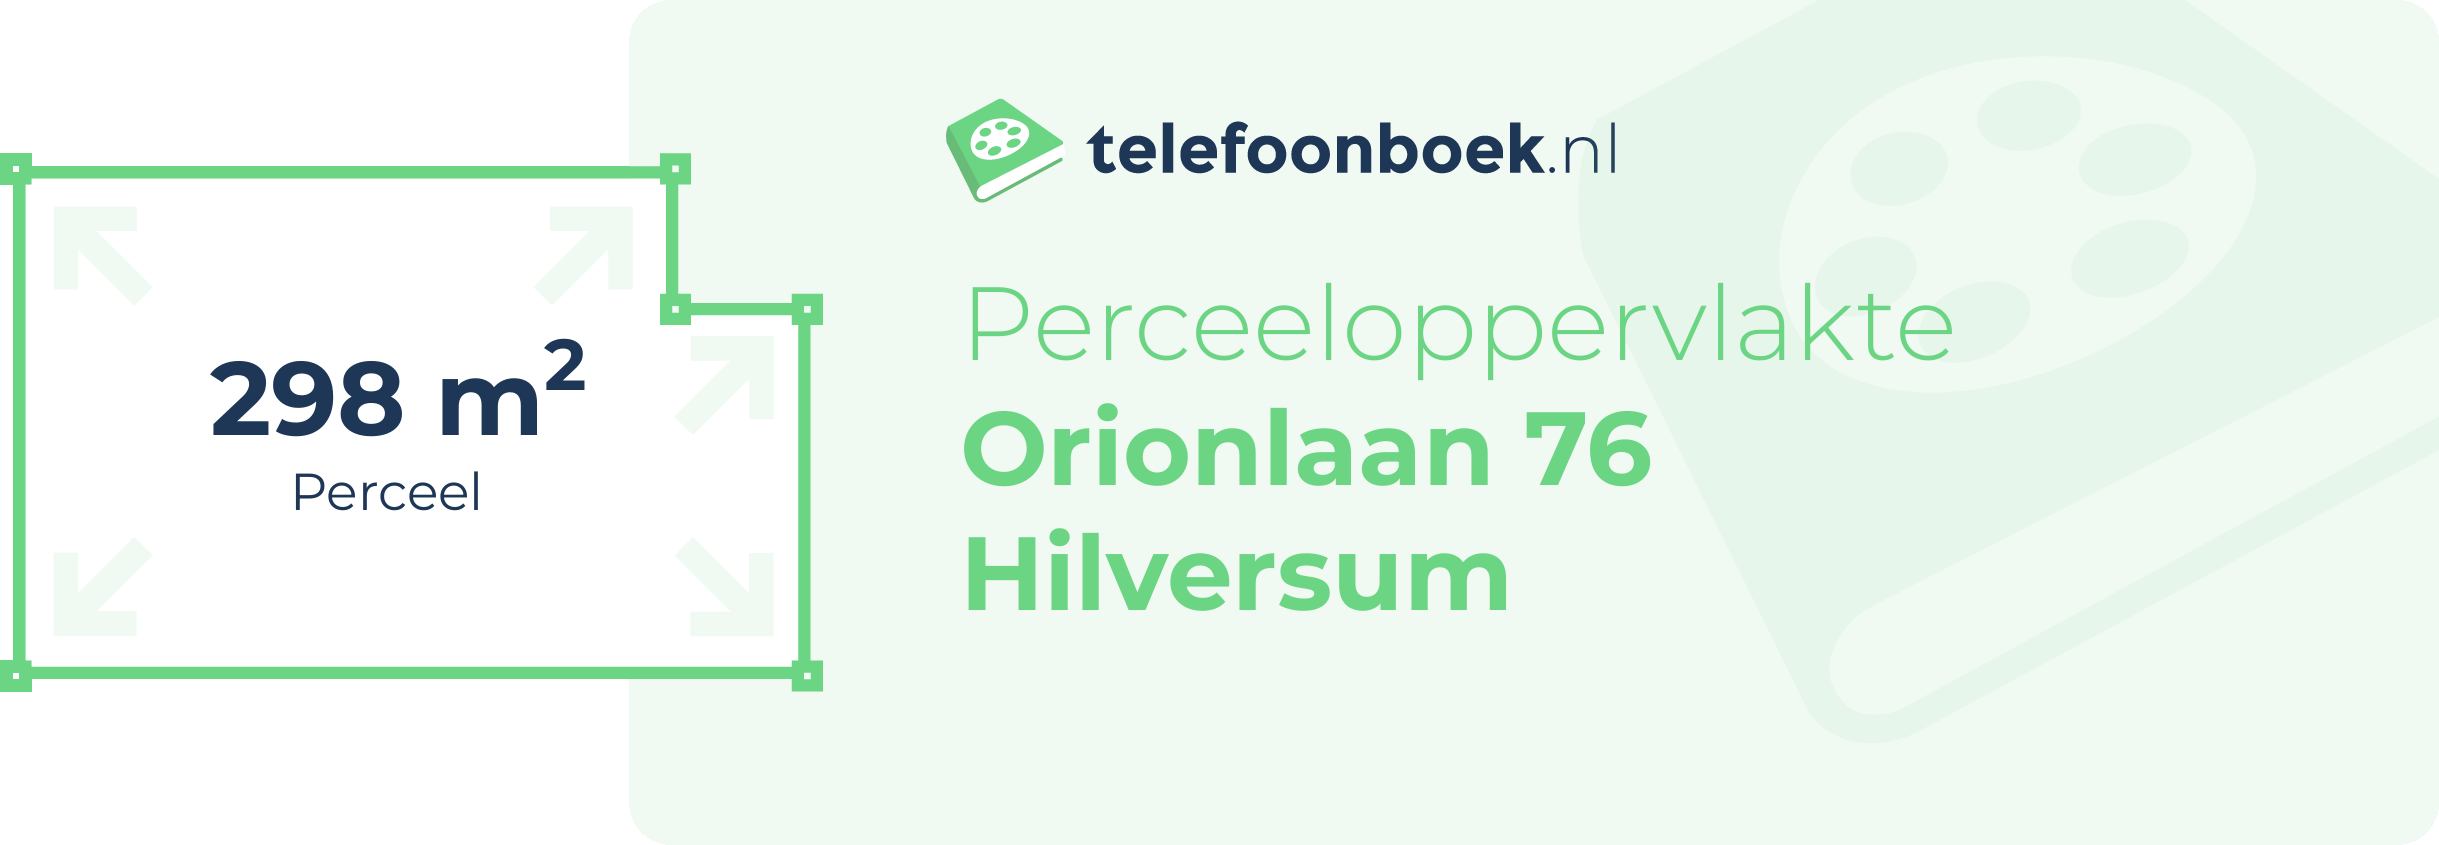 Perceeloppervlakte Orionlaan 76 Hilversum